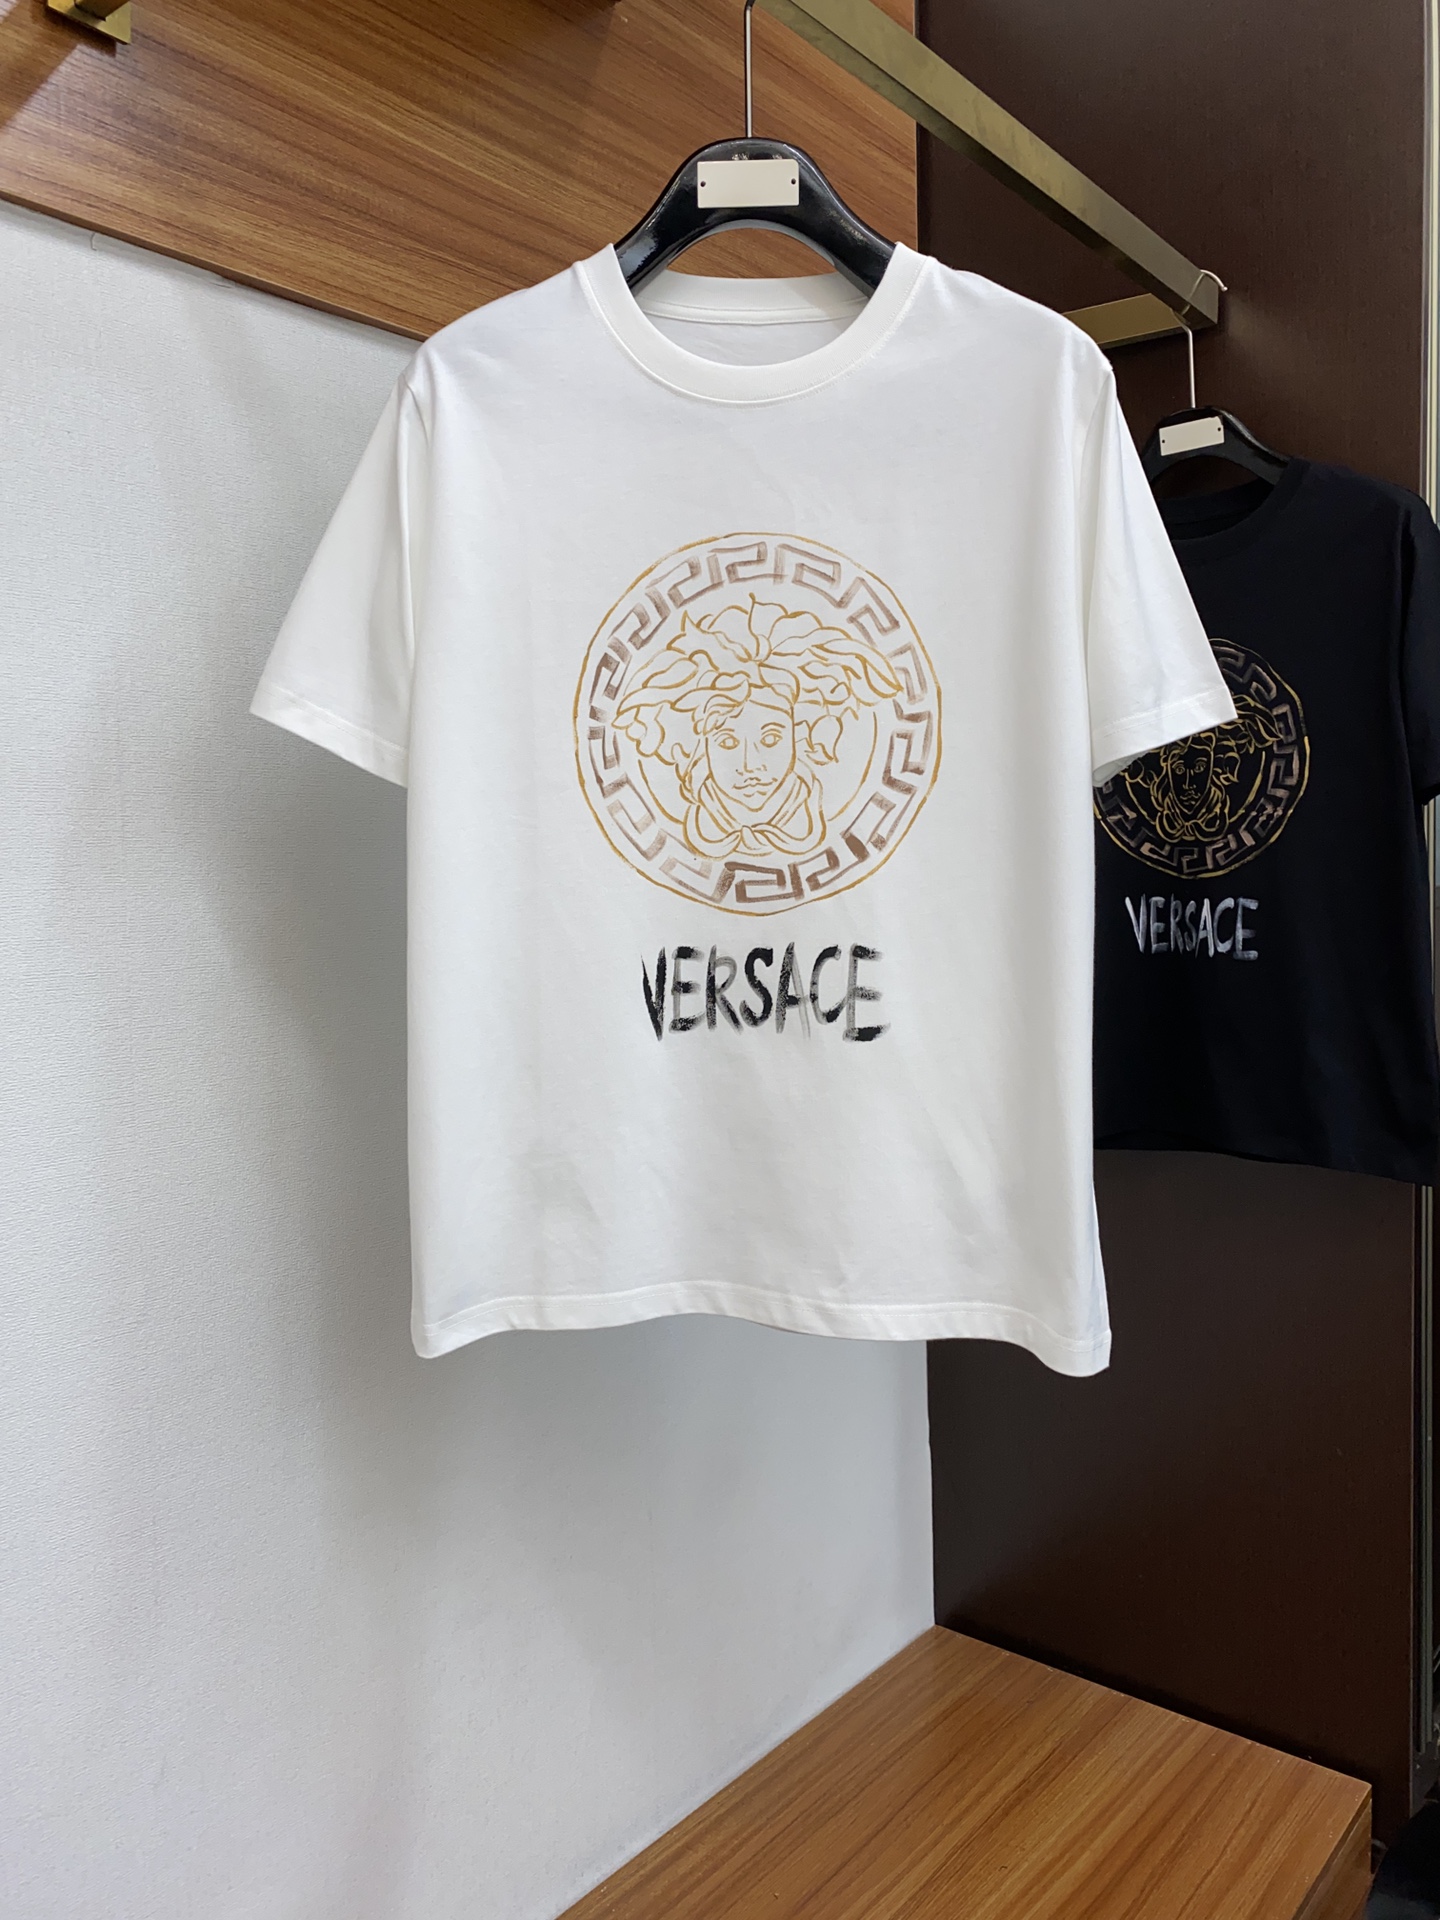 Versace Clothing T-Shirt Men Cotton Vintage Short Sleeve